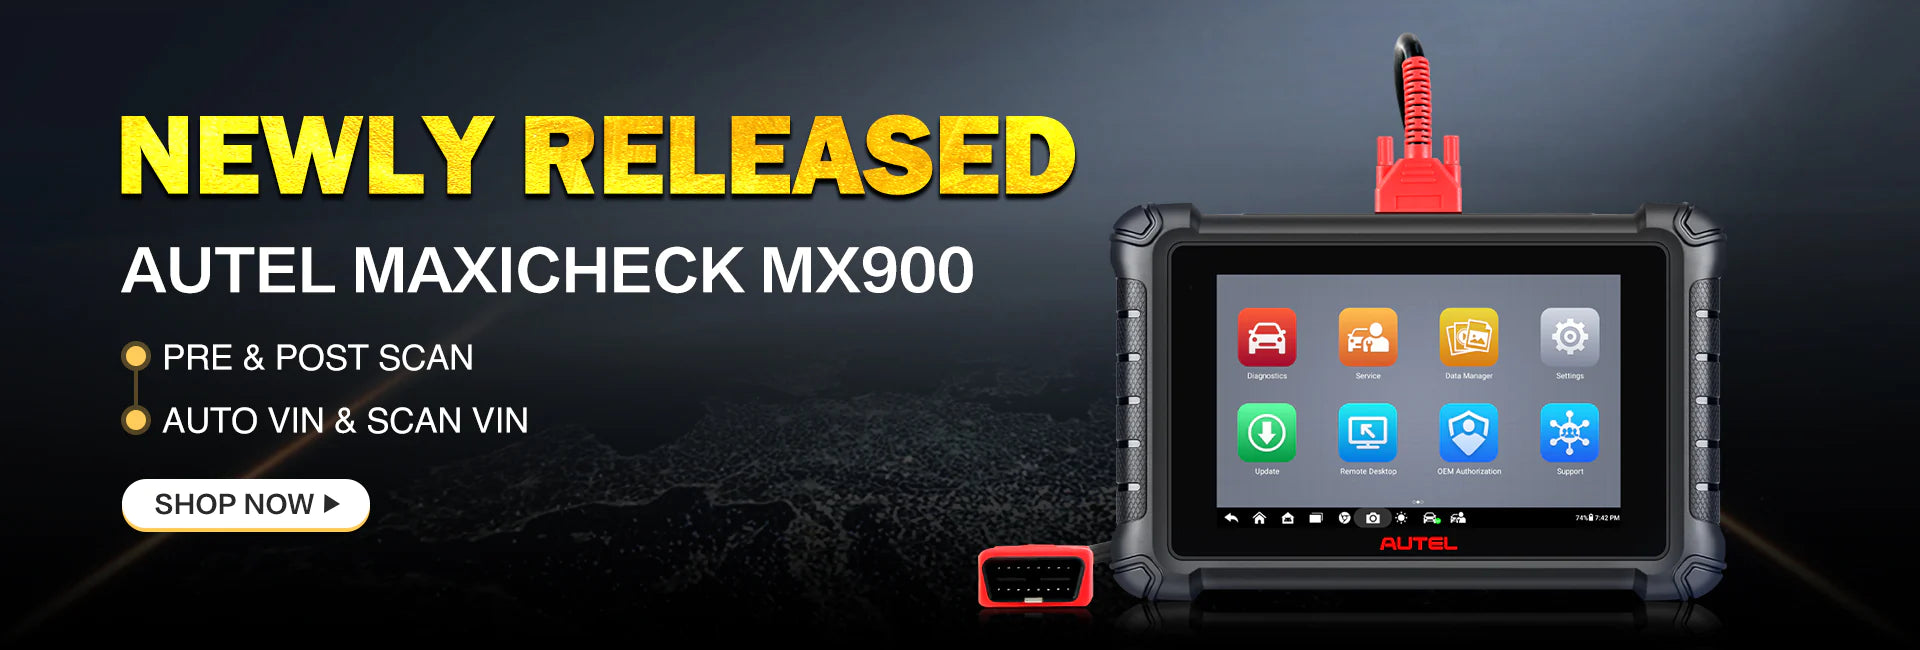 MX900 New Product